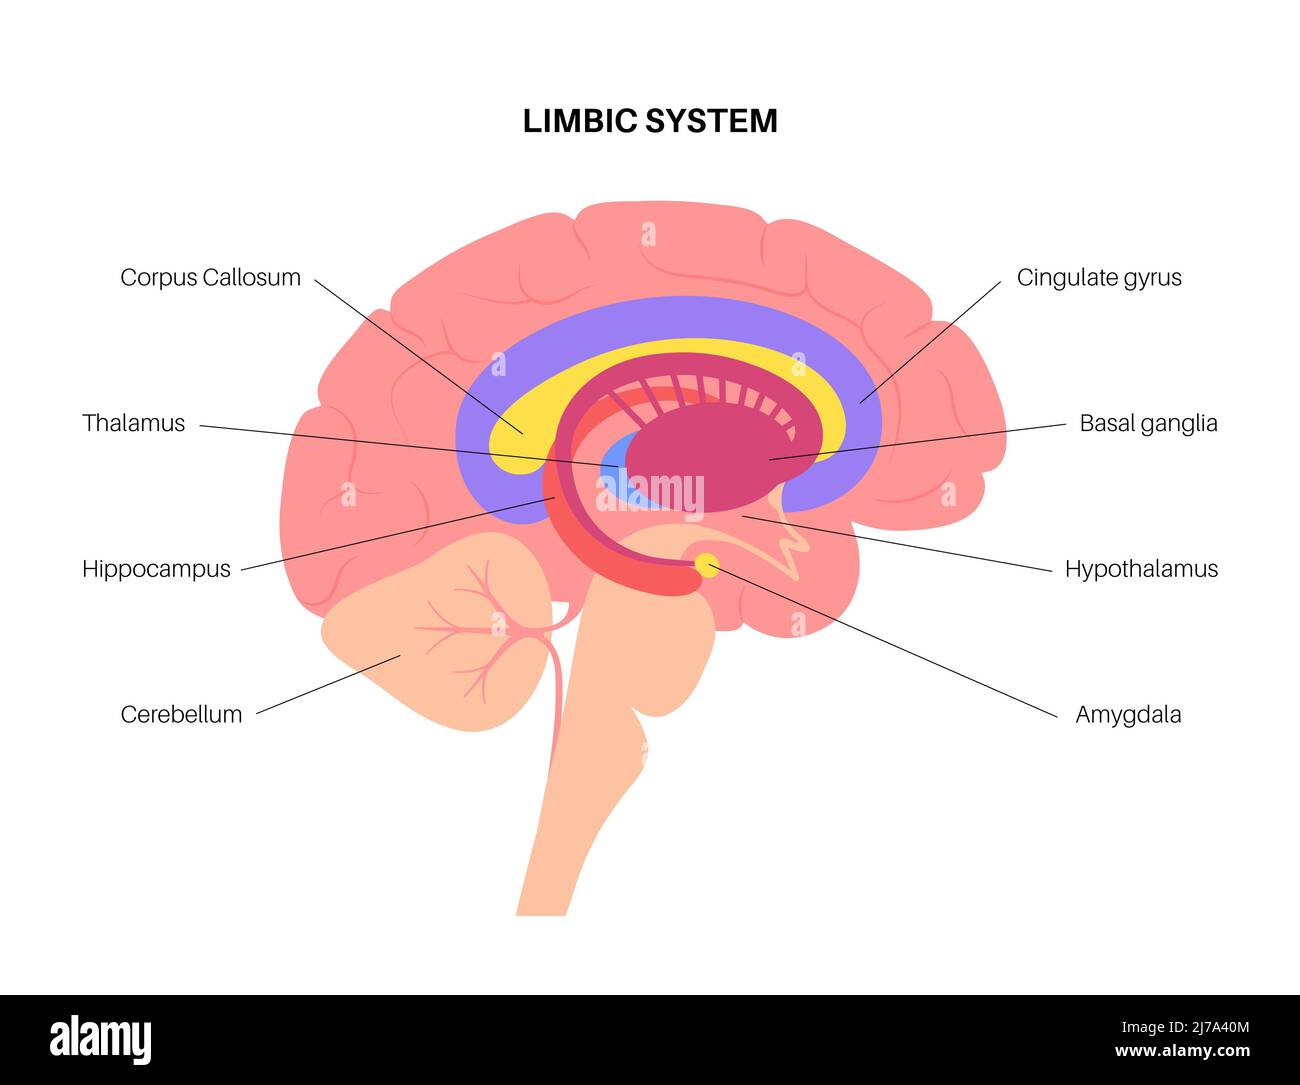 Brain limbic system, illustration Stock Photo